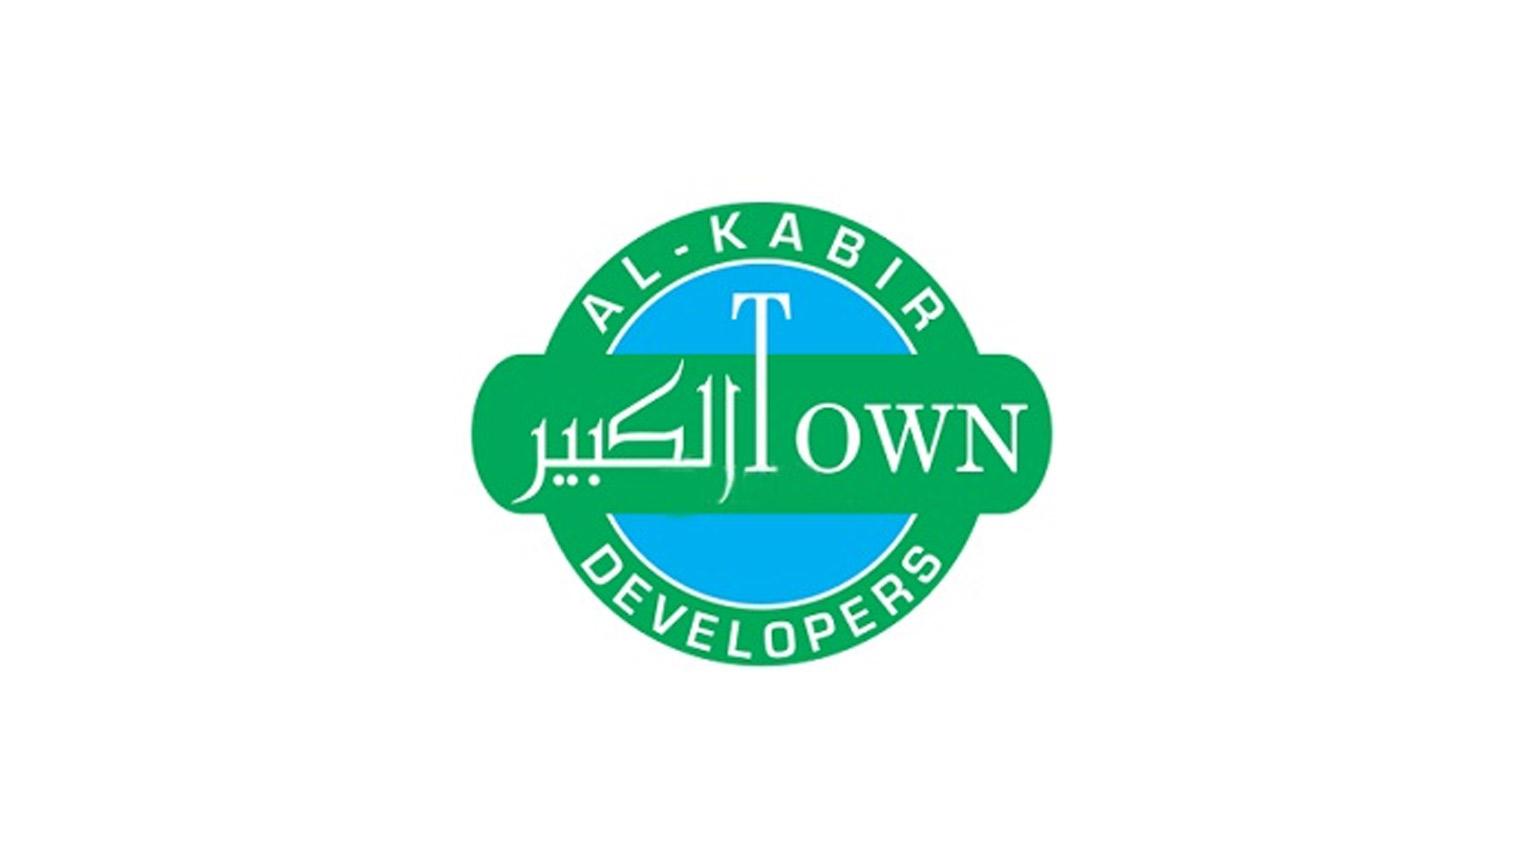 Al kabir developers